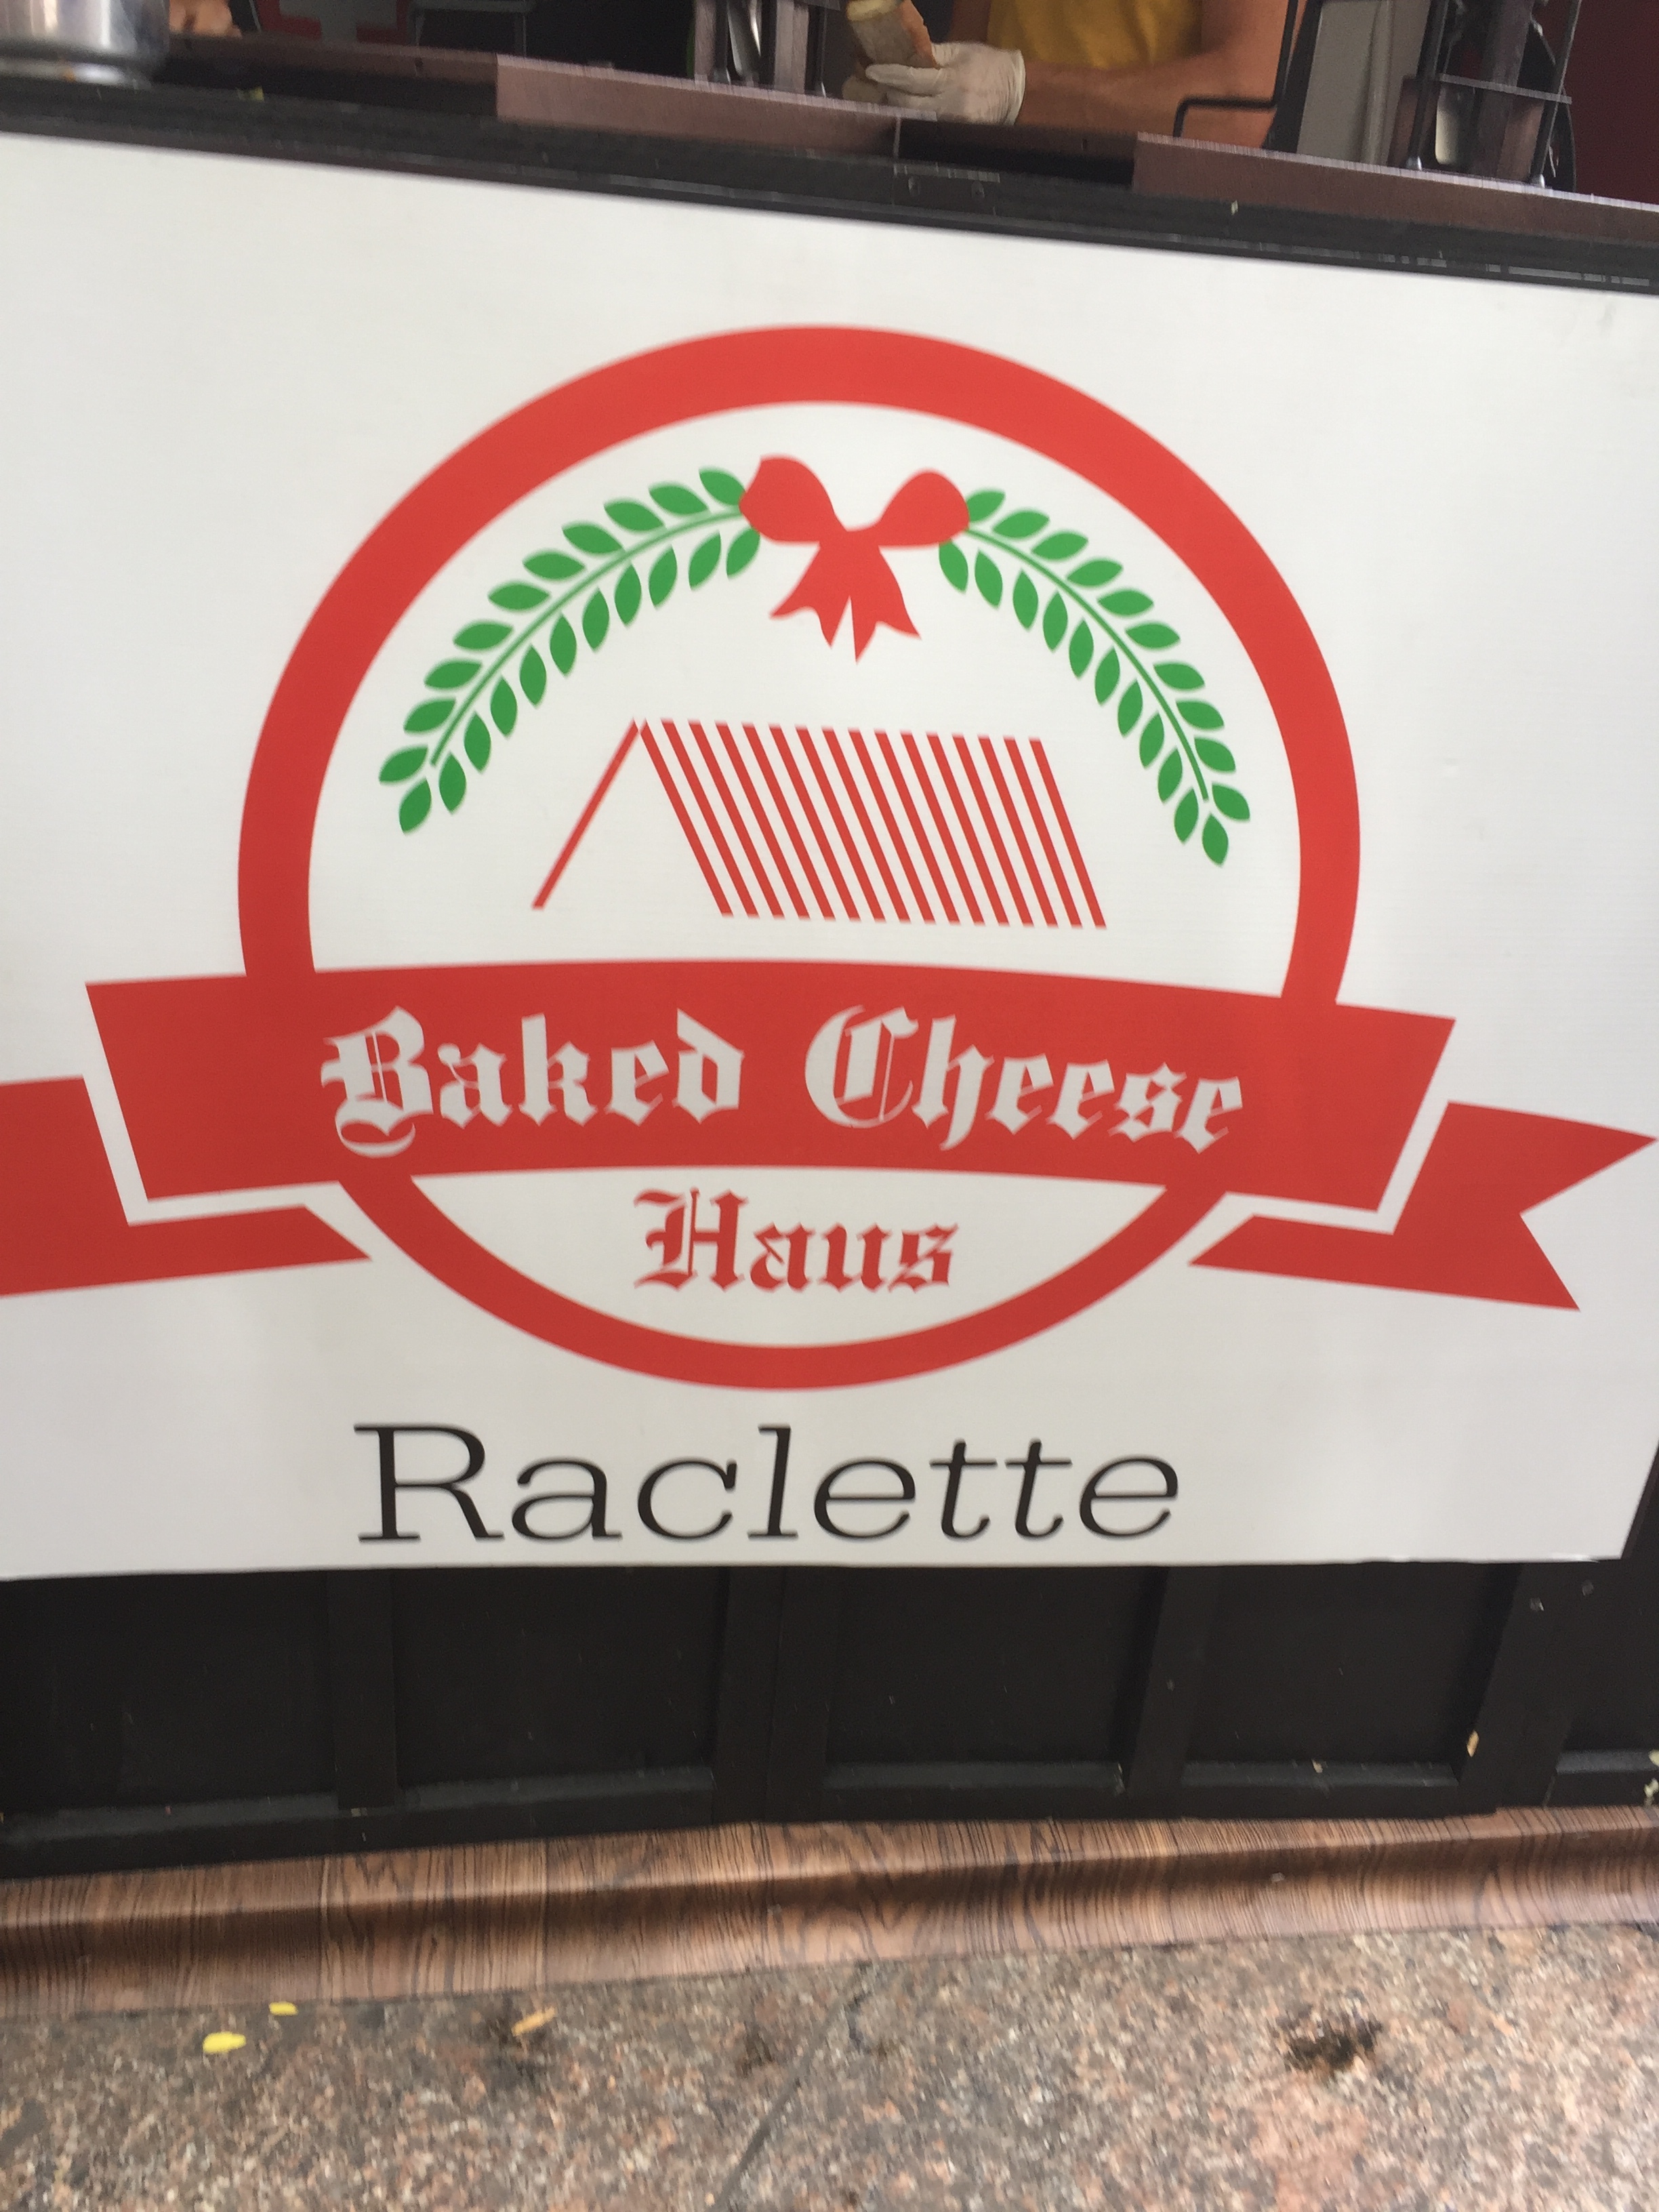 Raclette - Wikipedia